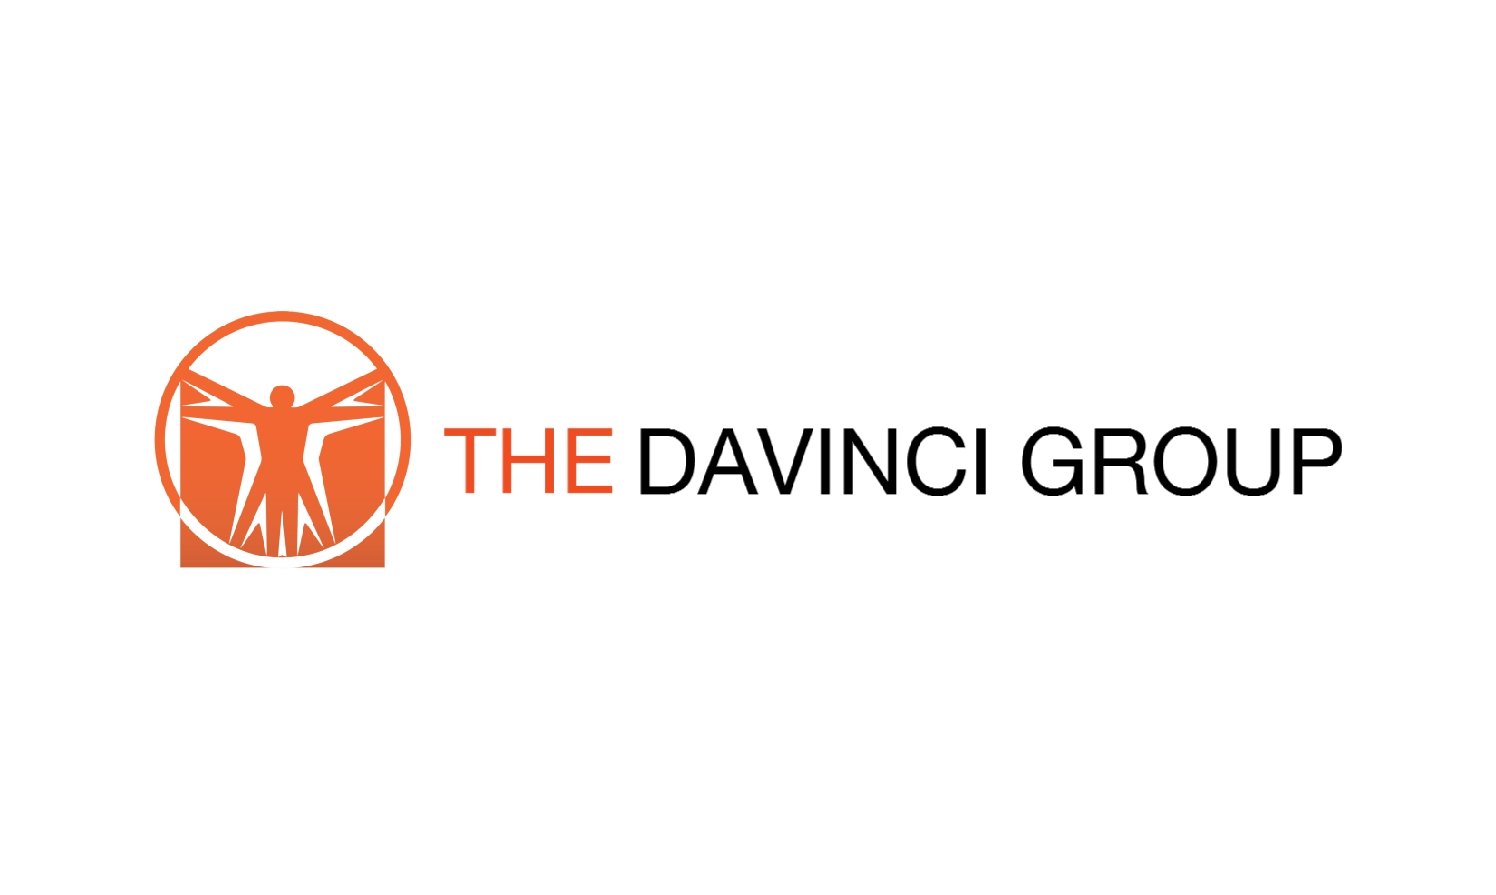 DaVinci Group sponsor logo